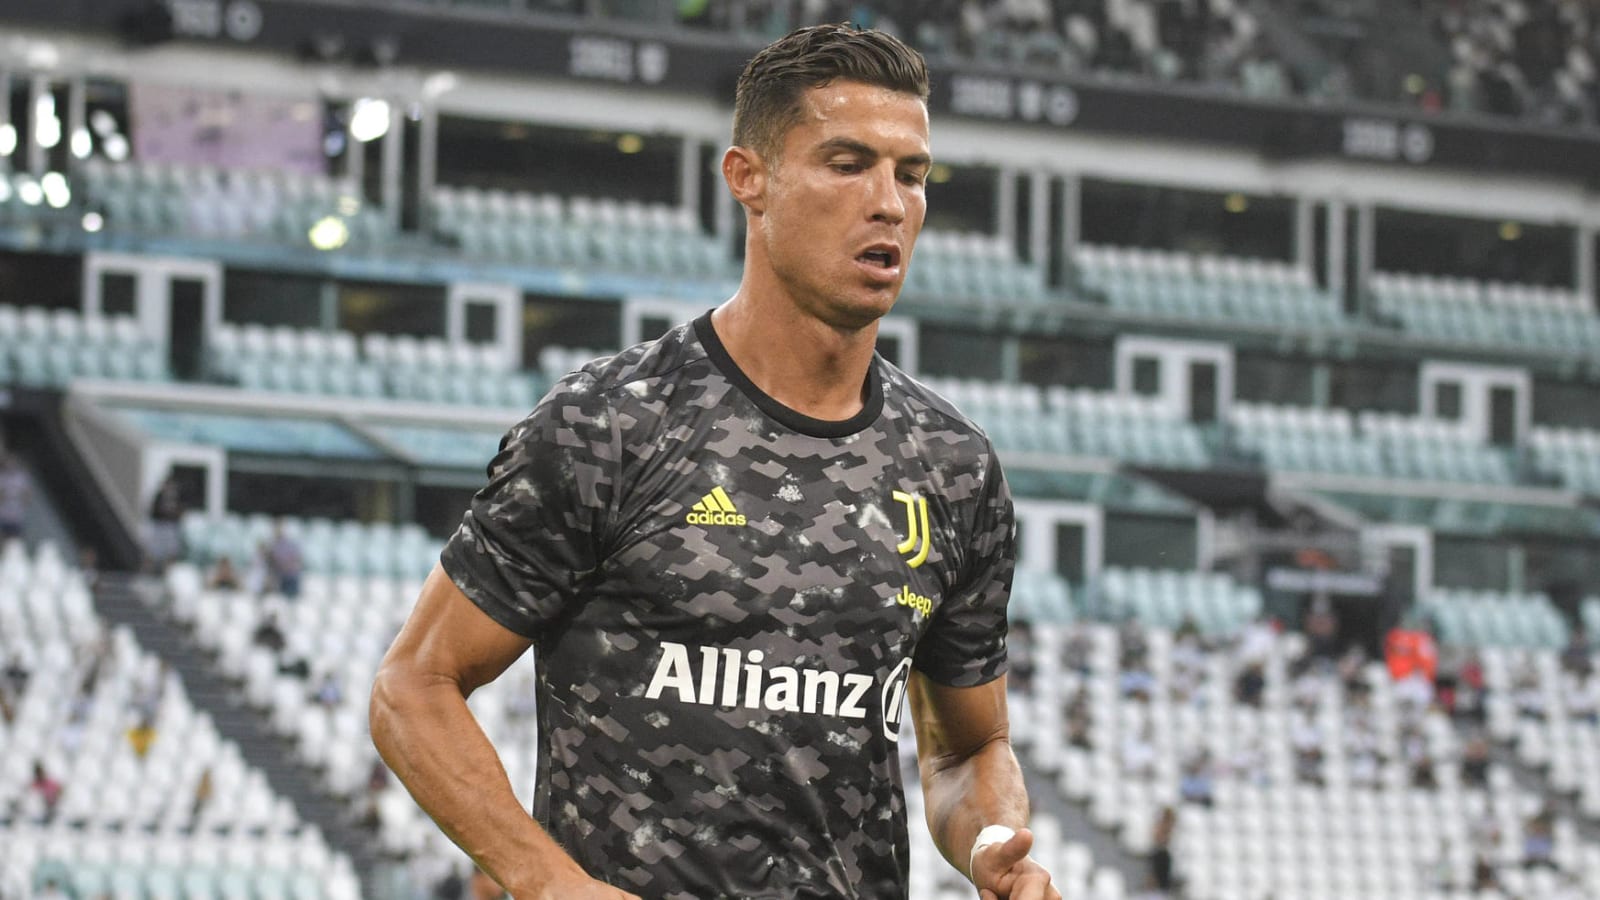 Cristiano Ronaldo upset over 'disrespectful' transfer rumors